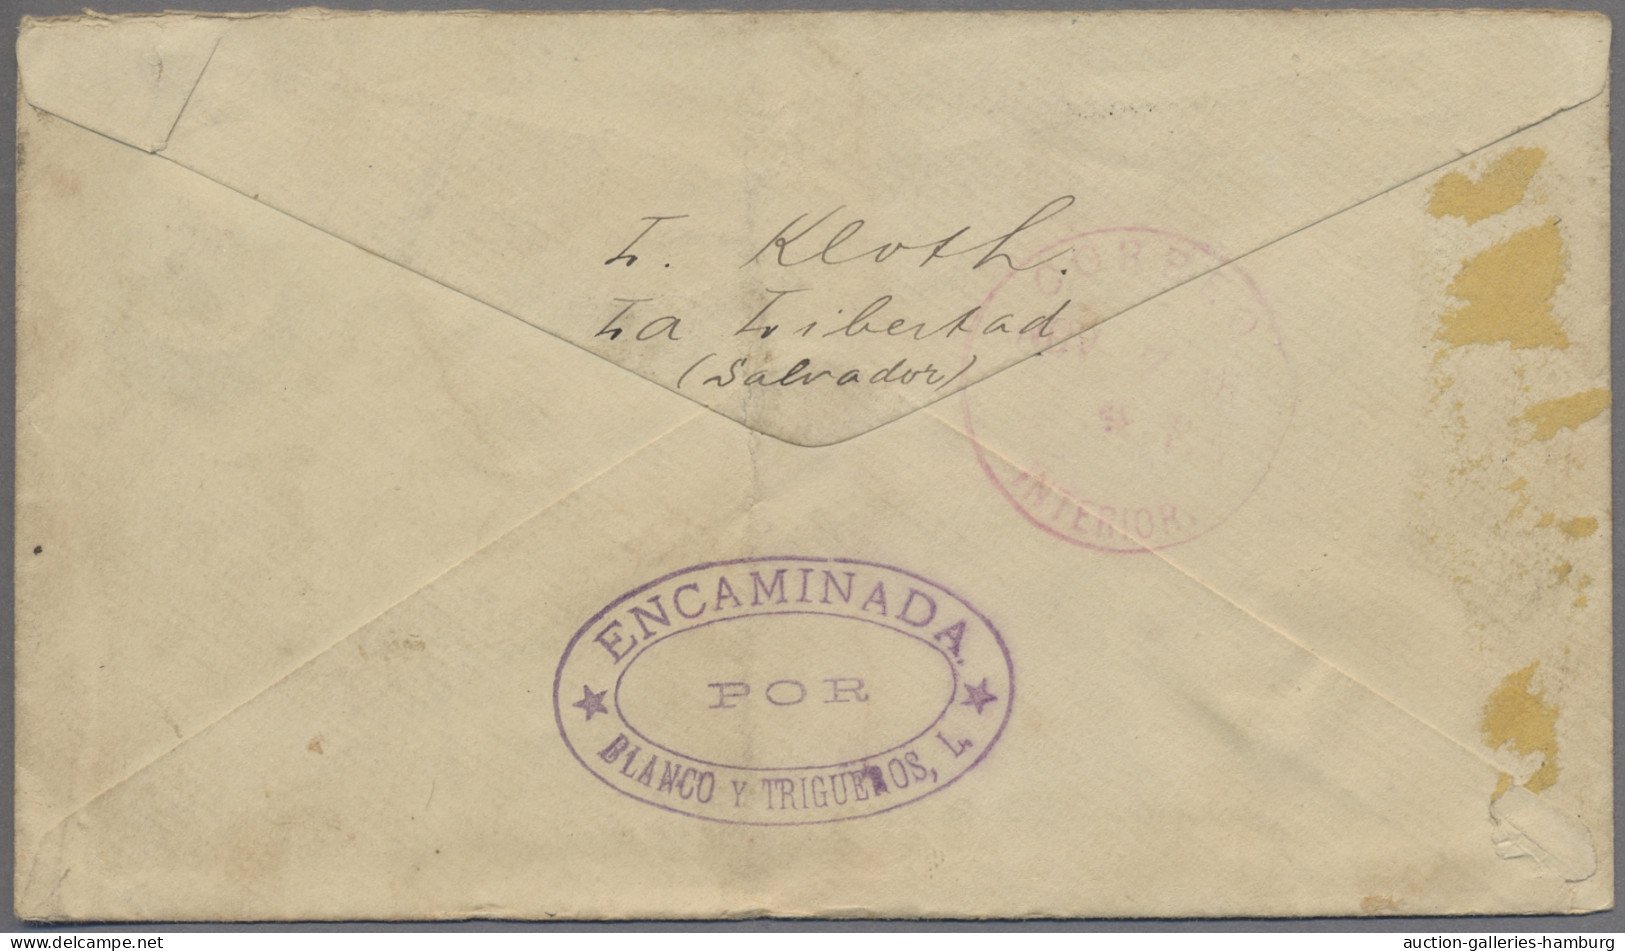 El Salvador - Postal Stationery: 1889, Nov 4, "Volcano" PSE 5c Blue On White Fro - Salvador